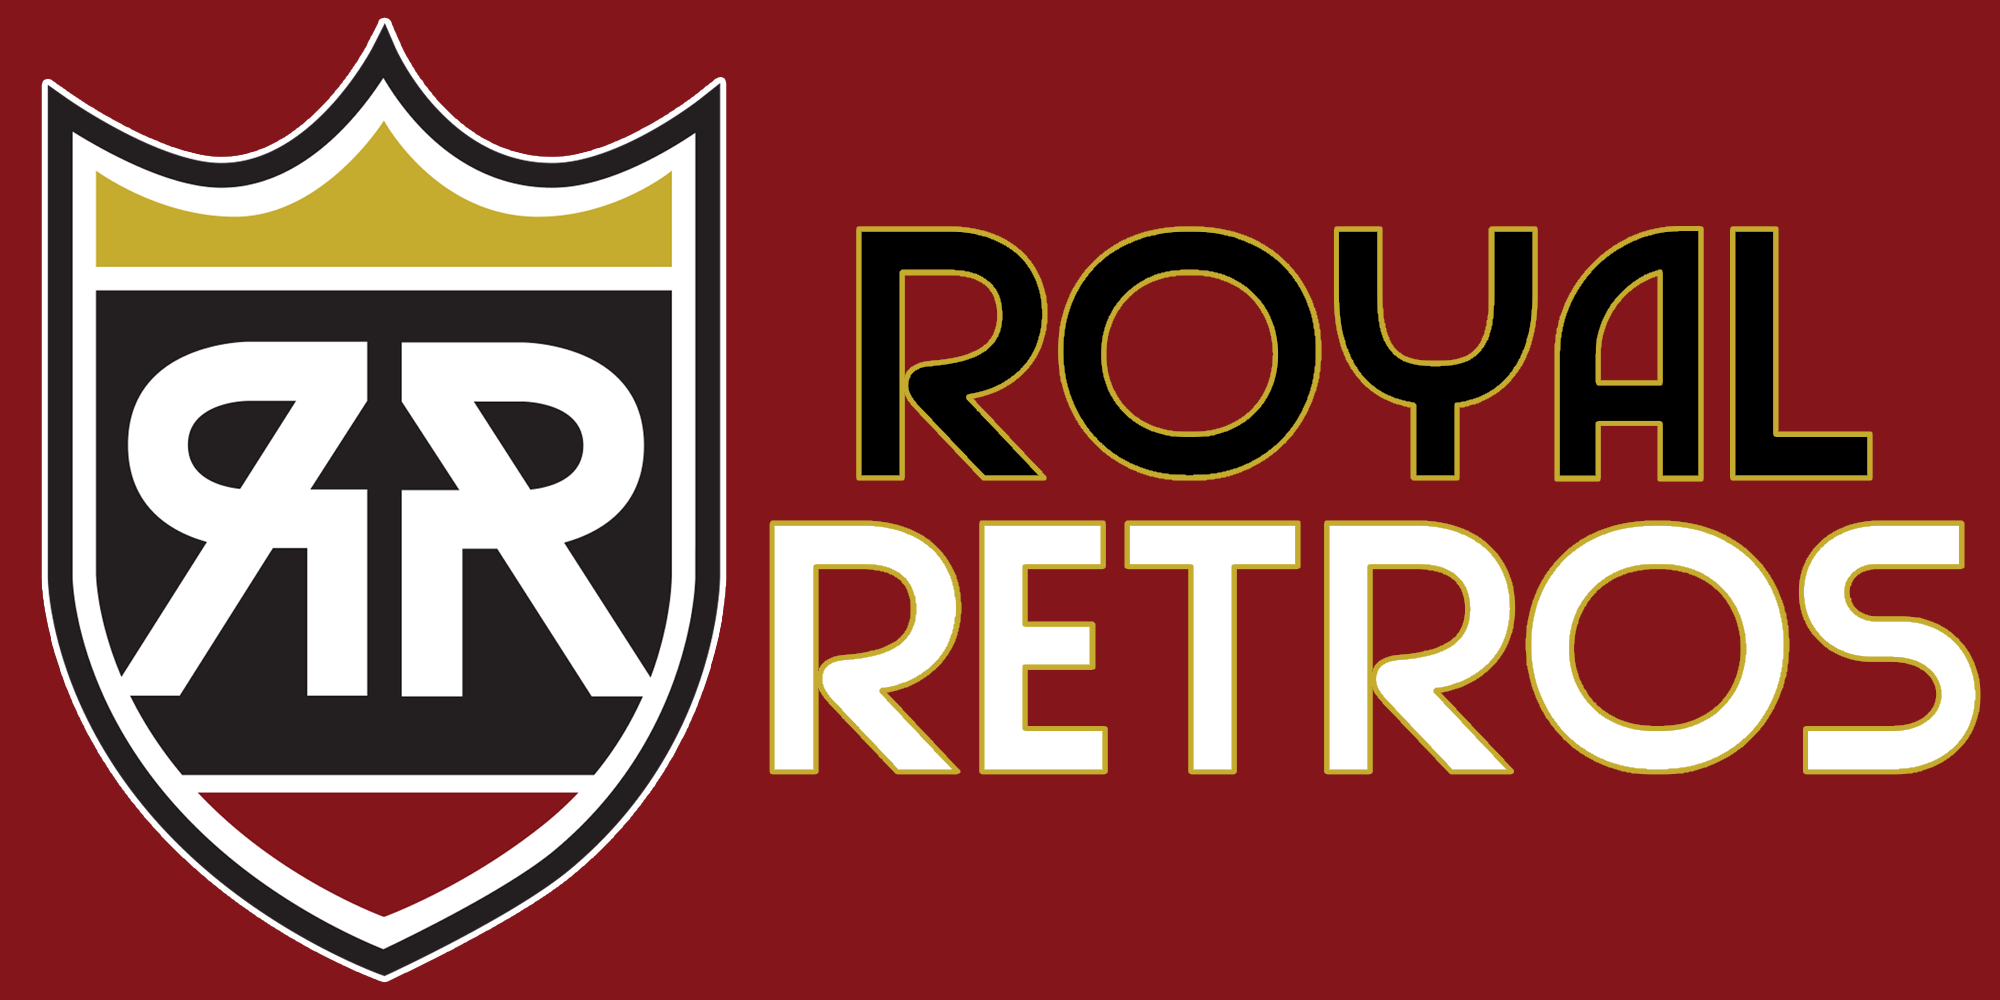 Cincinnati Tigers NLB Jersey – Royal Retros